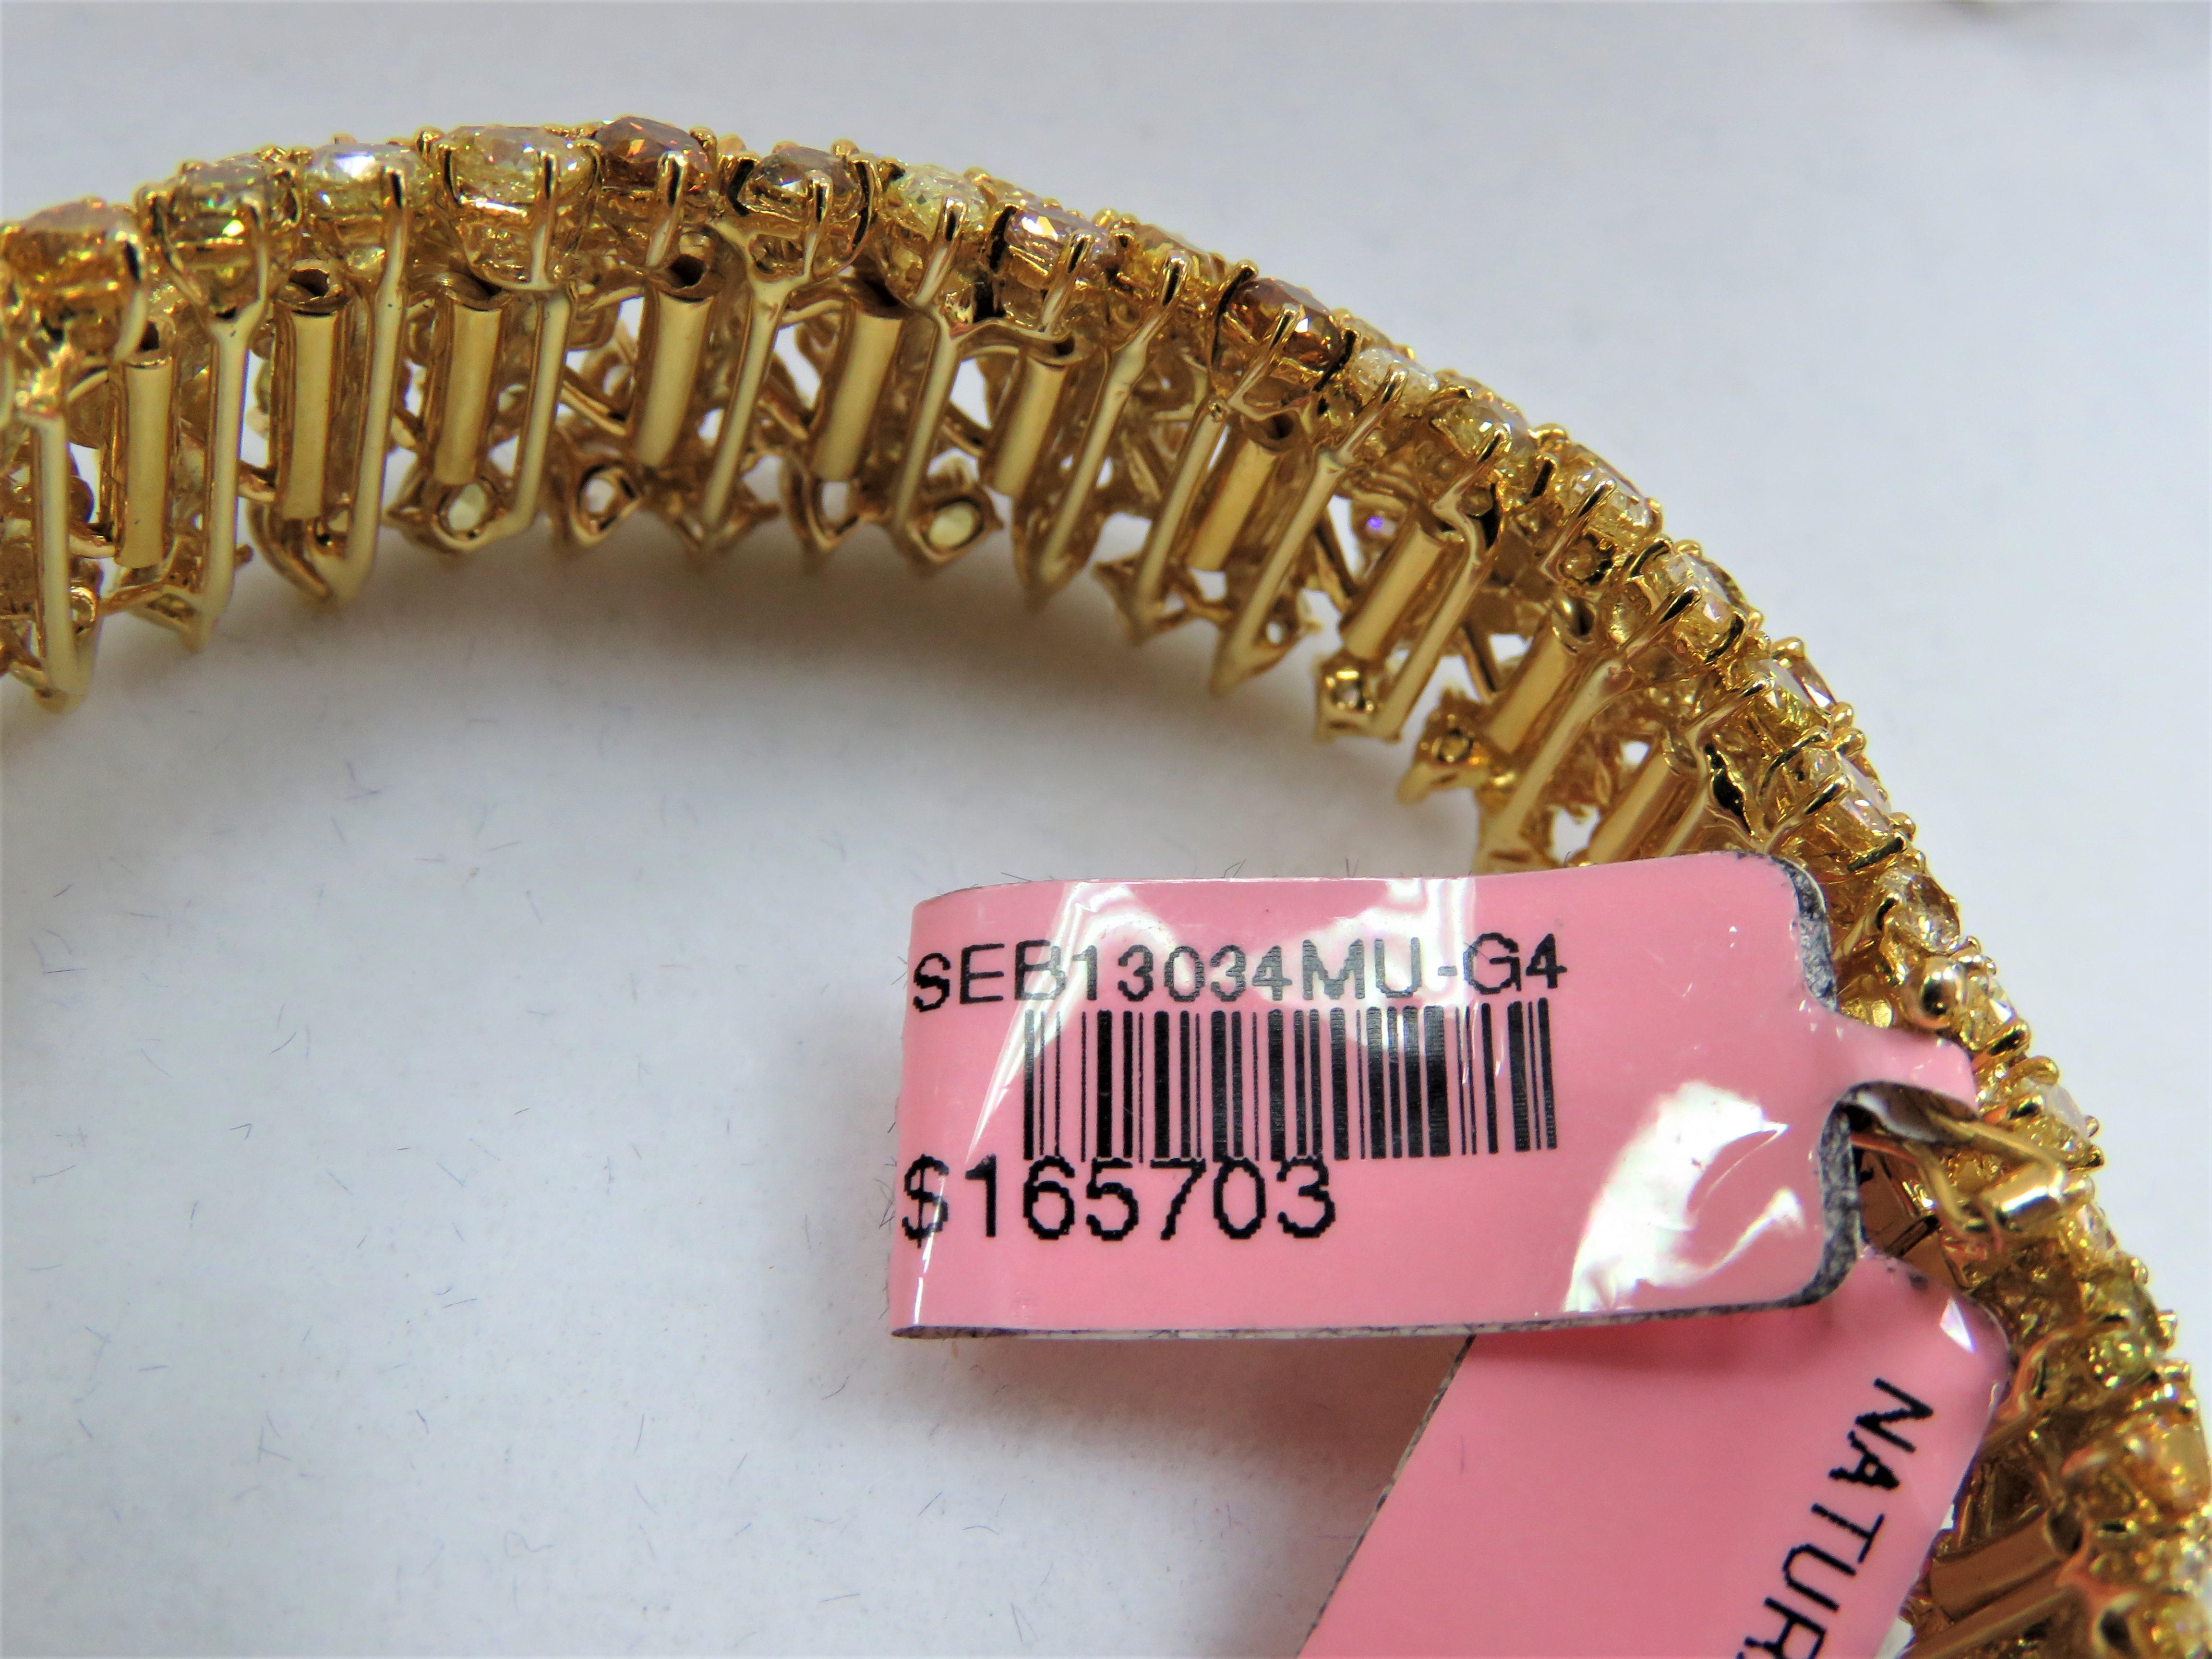 Mixed Cut Nwt $165, 703 Rare Fancy 18kt Gold Gorgeous 35ct Fancy Yellow Diamond Bracelet For Sale